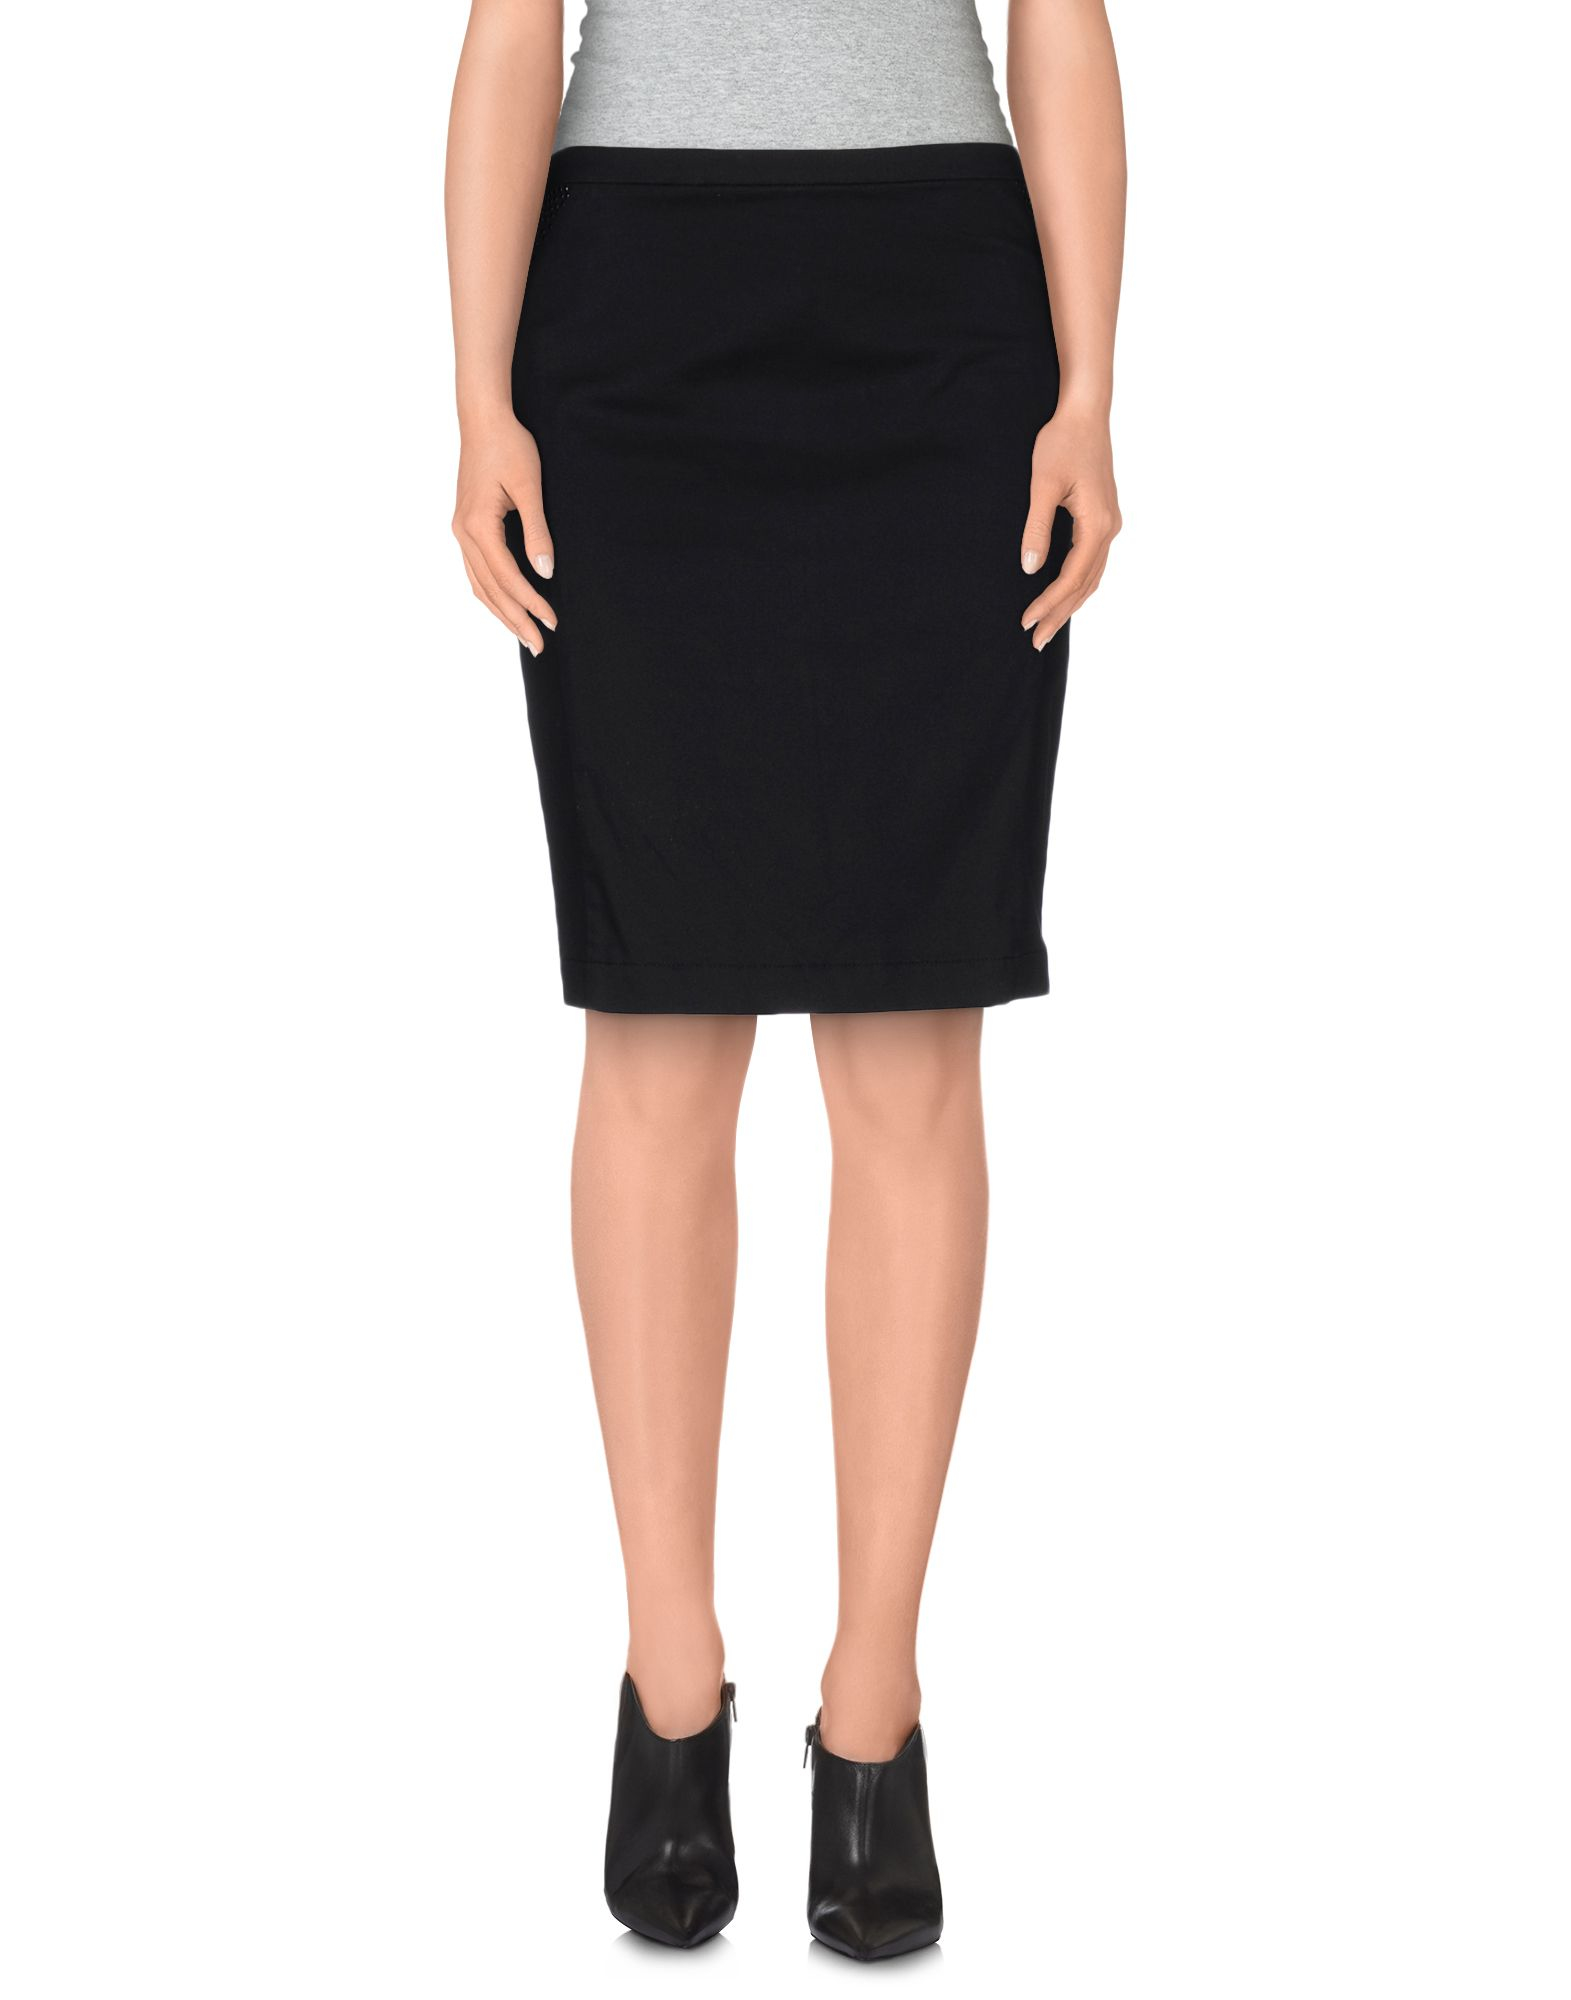 Lyst - Armani Jeans Knee Length Skirt in Black